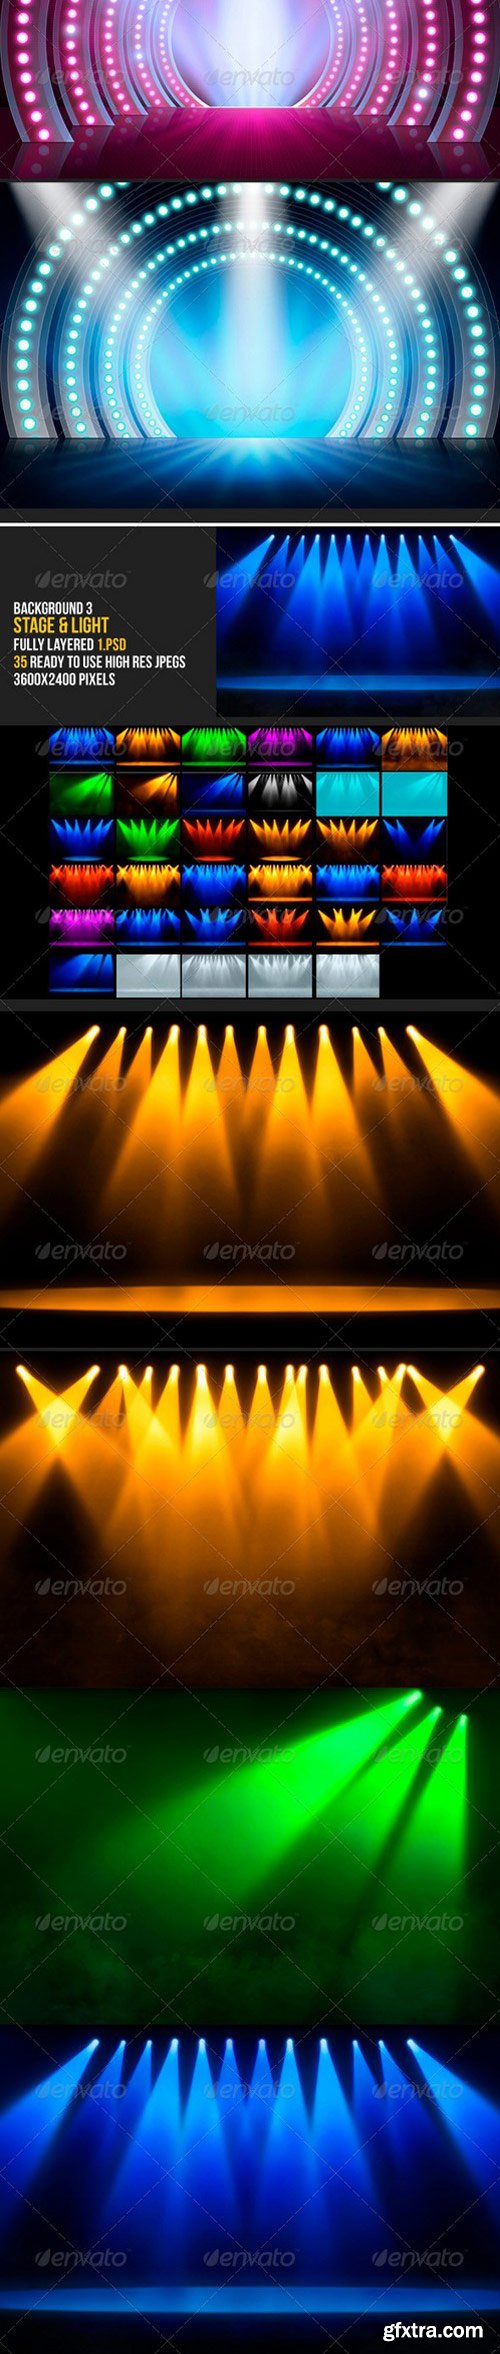 GraphicRiver - Stage Lights Backgrounds Bundle 6684097